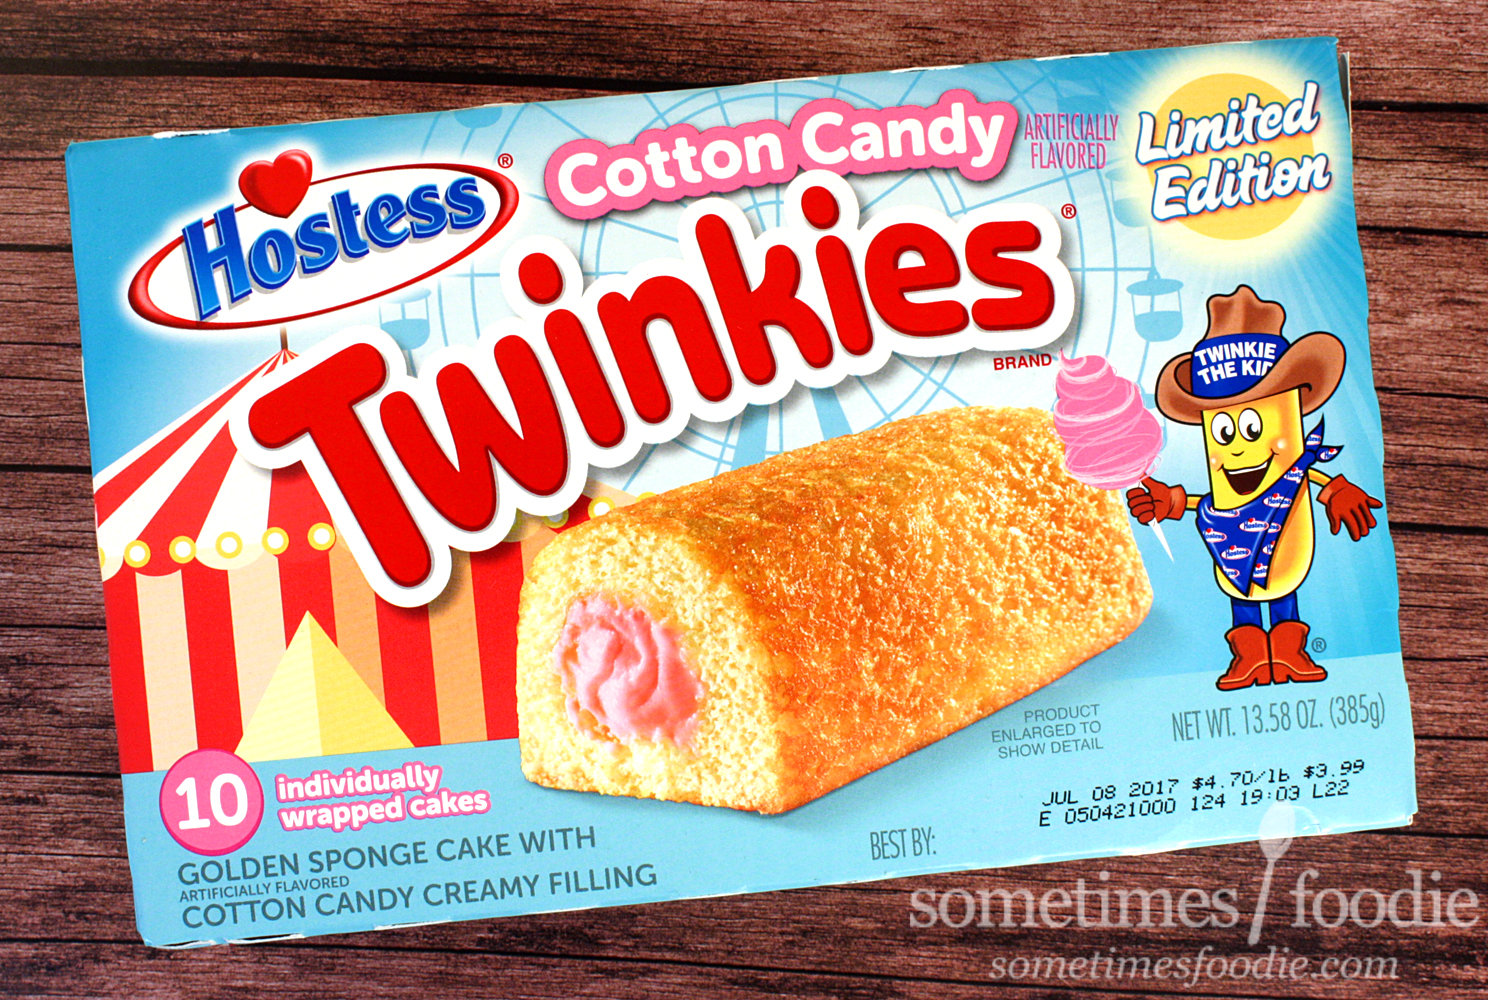 Cotton Candy Twinkie